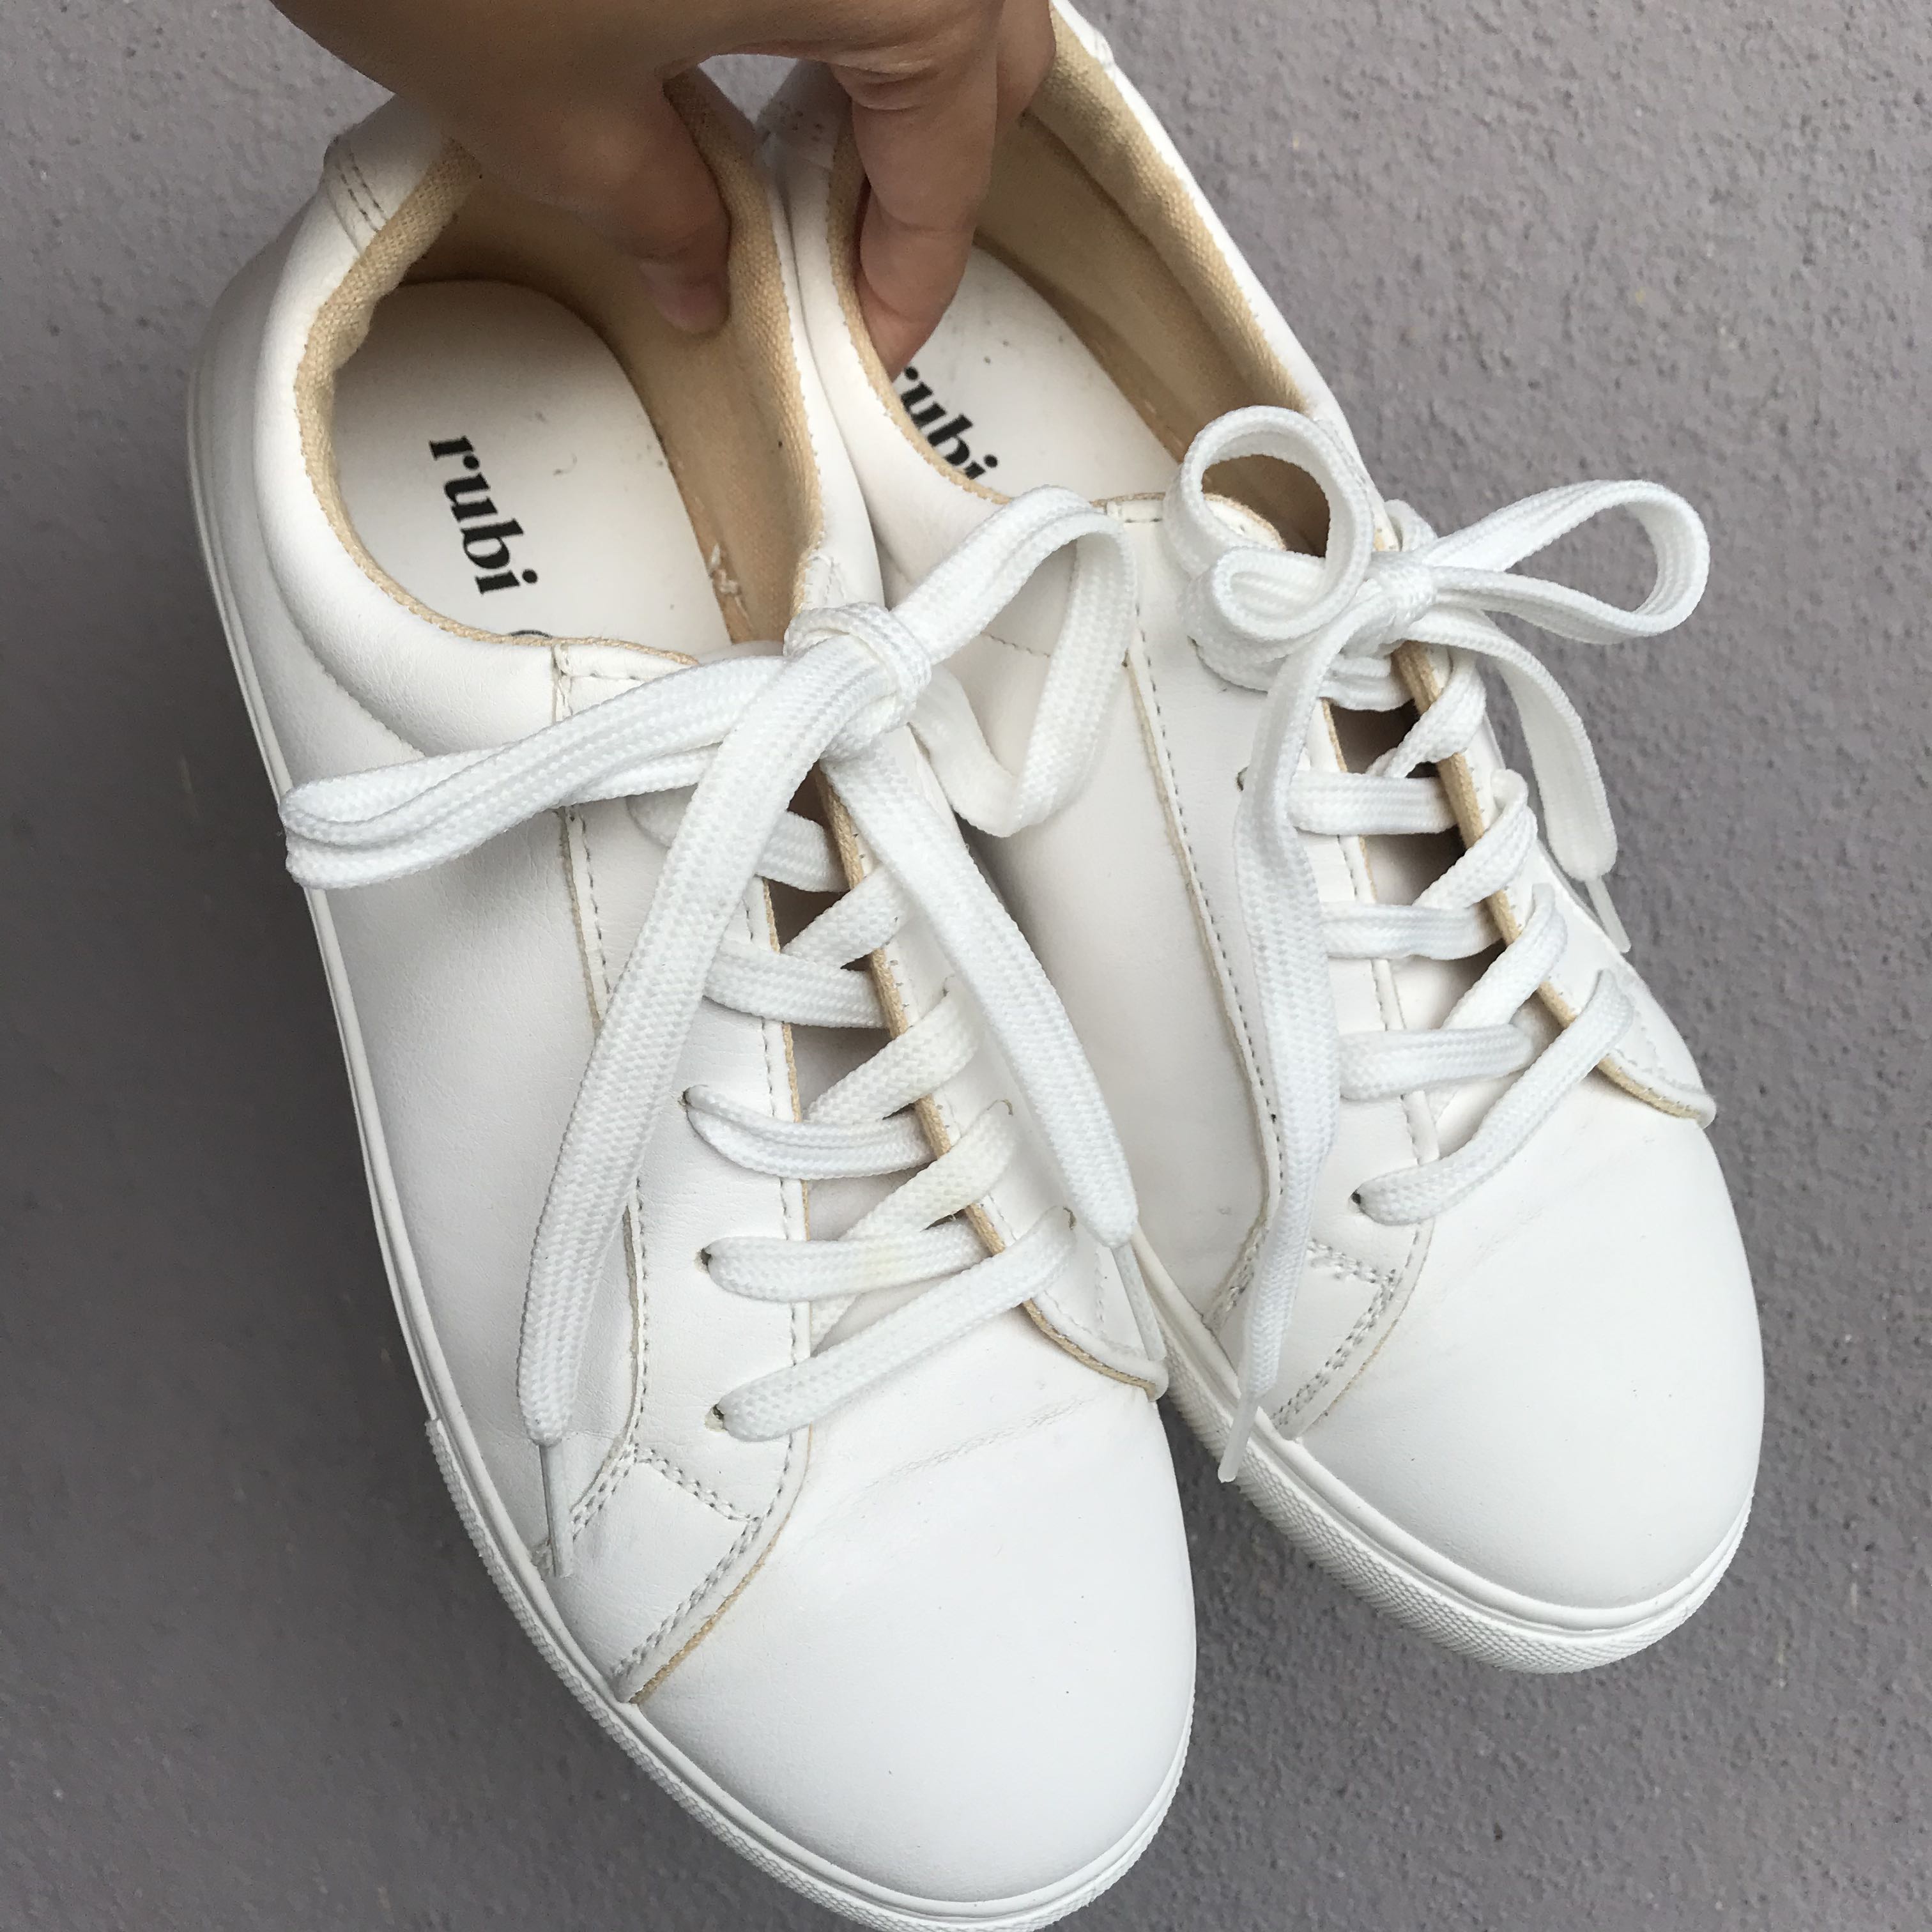 rubi white shoes